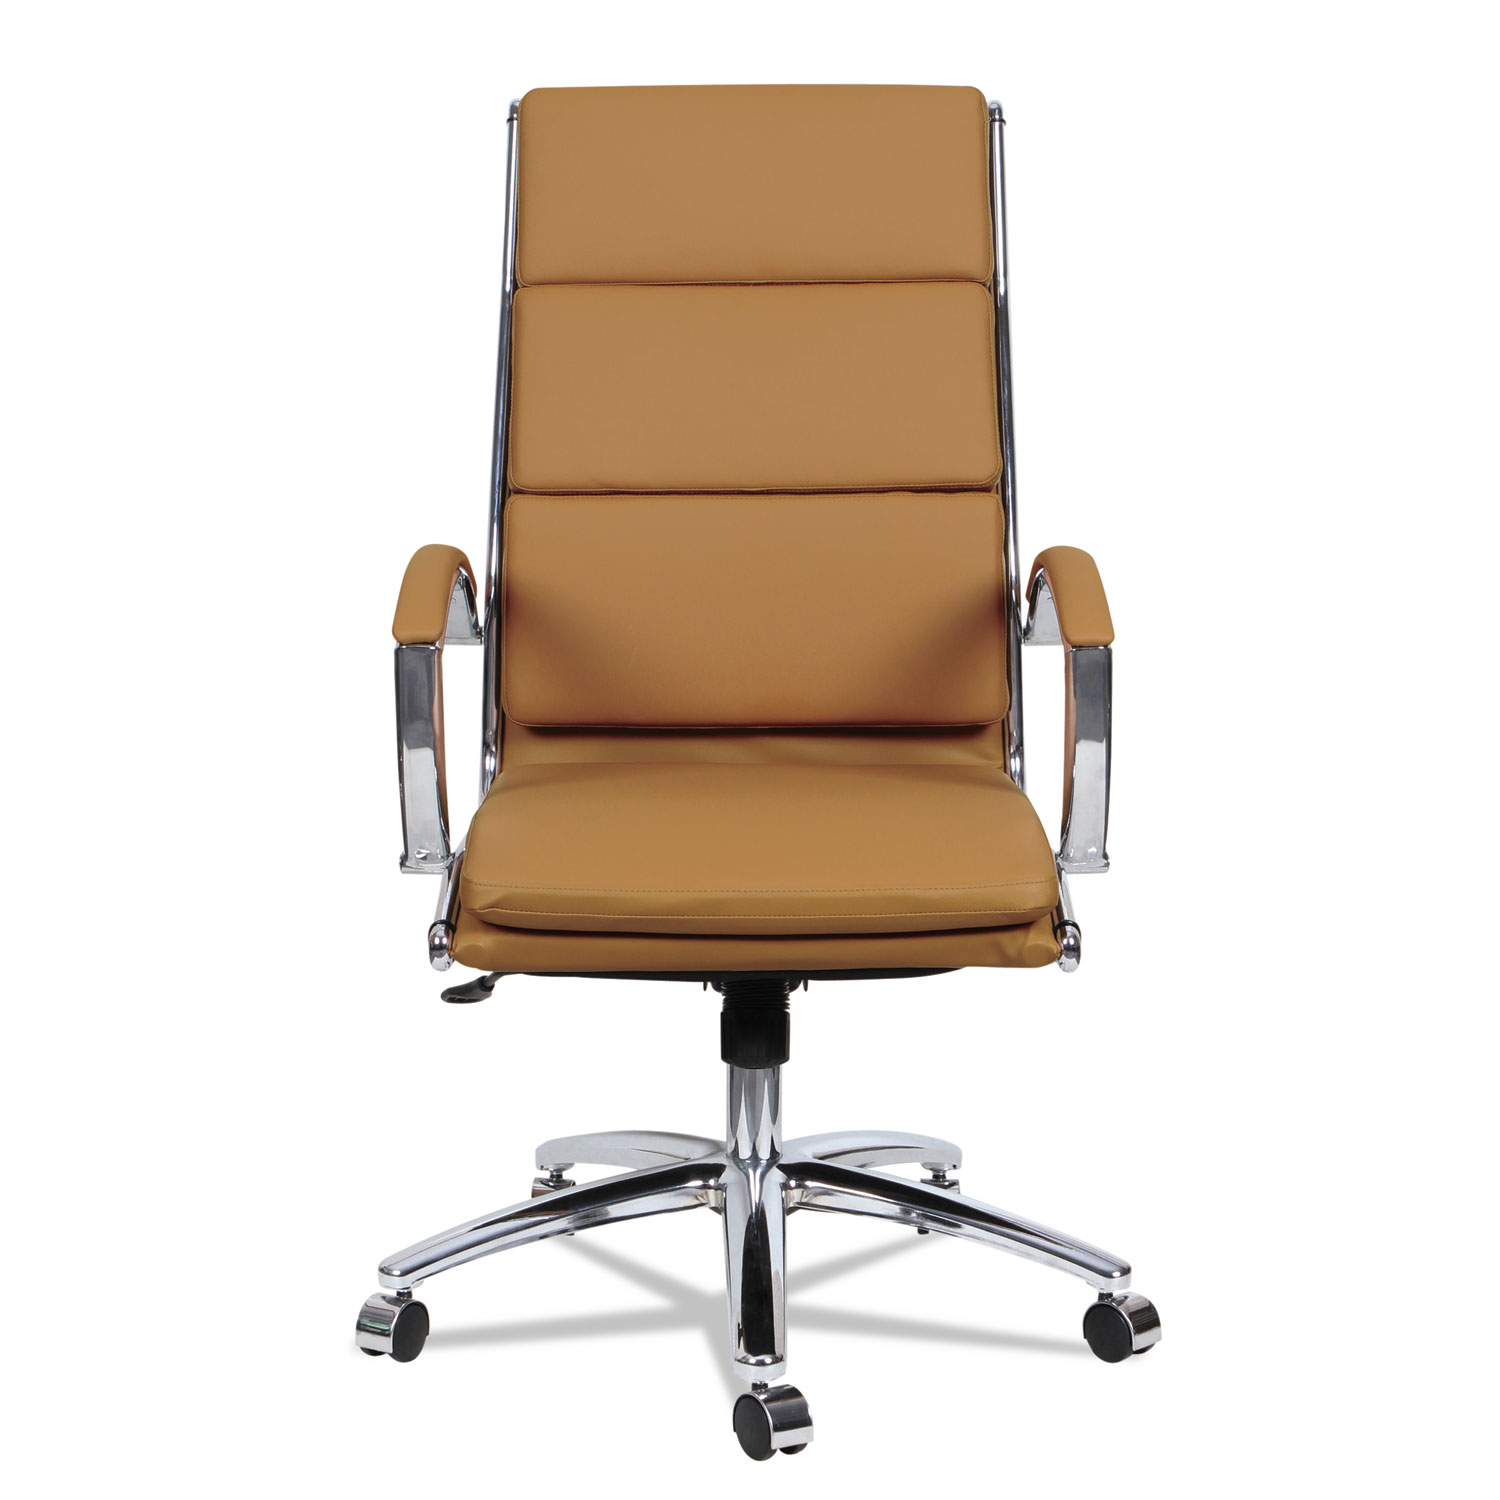  Alera ALENR4159 Alera Neratoli High-Back Slim Profile Chair, Supports up to 275 lbs., Camel Seat/Camel Back, Chrome Base (ALENR4159) 